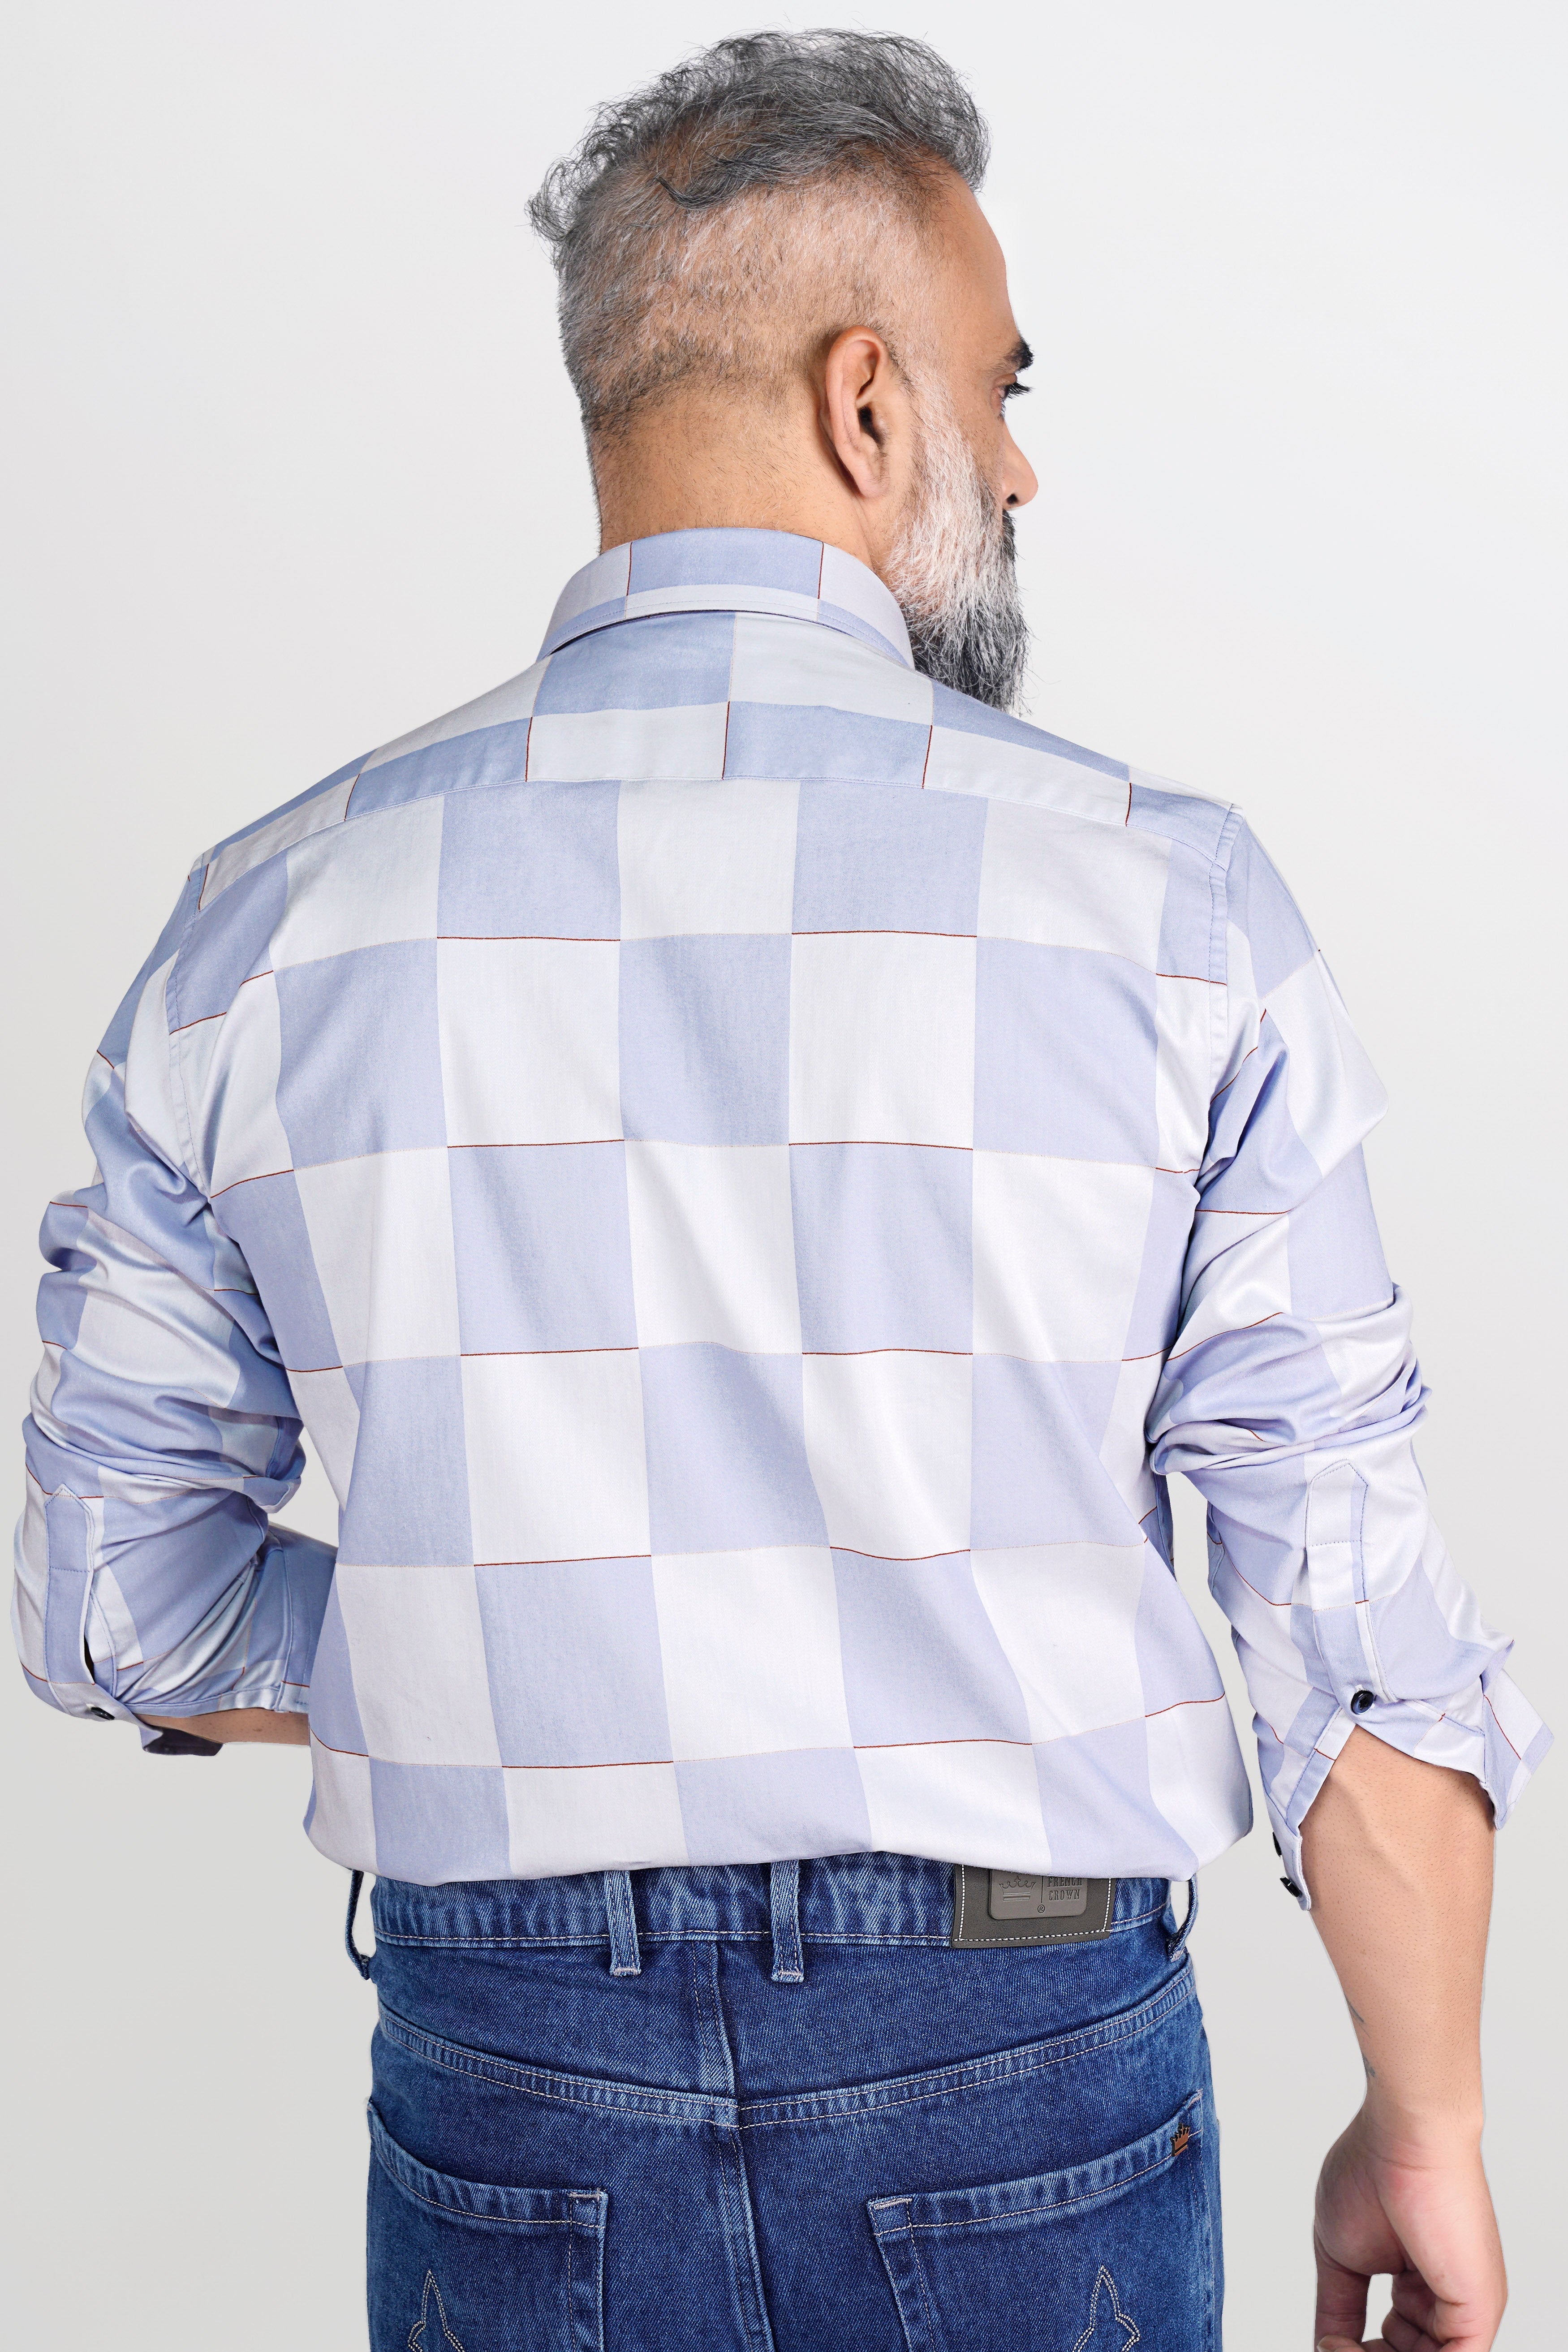 Bright White and Tealish Blue Checked Jacquard Textured Premium Giza Cotton Shirt